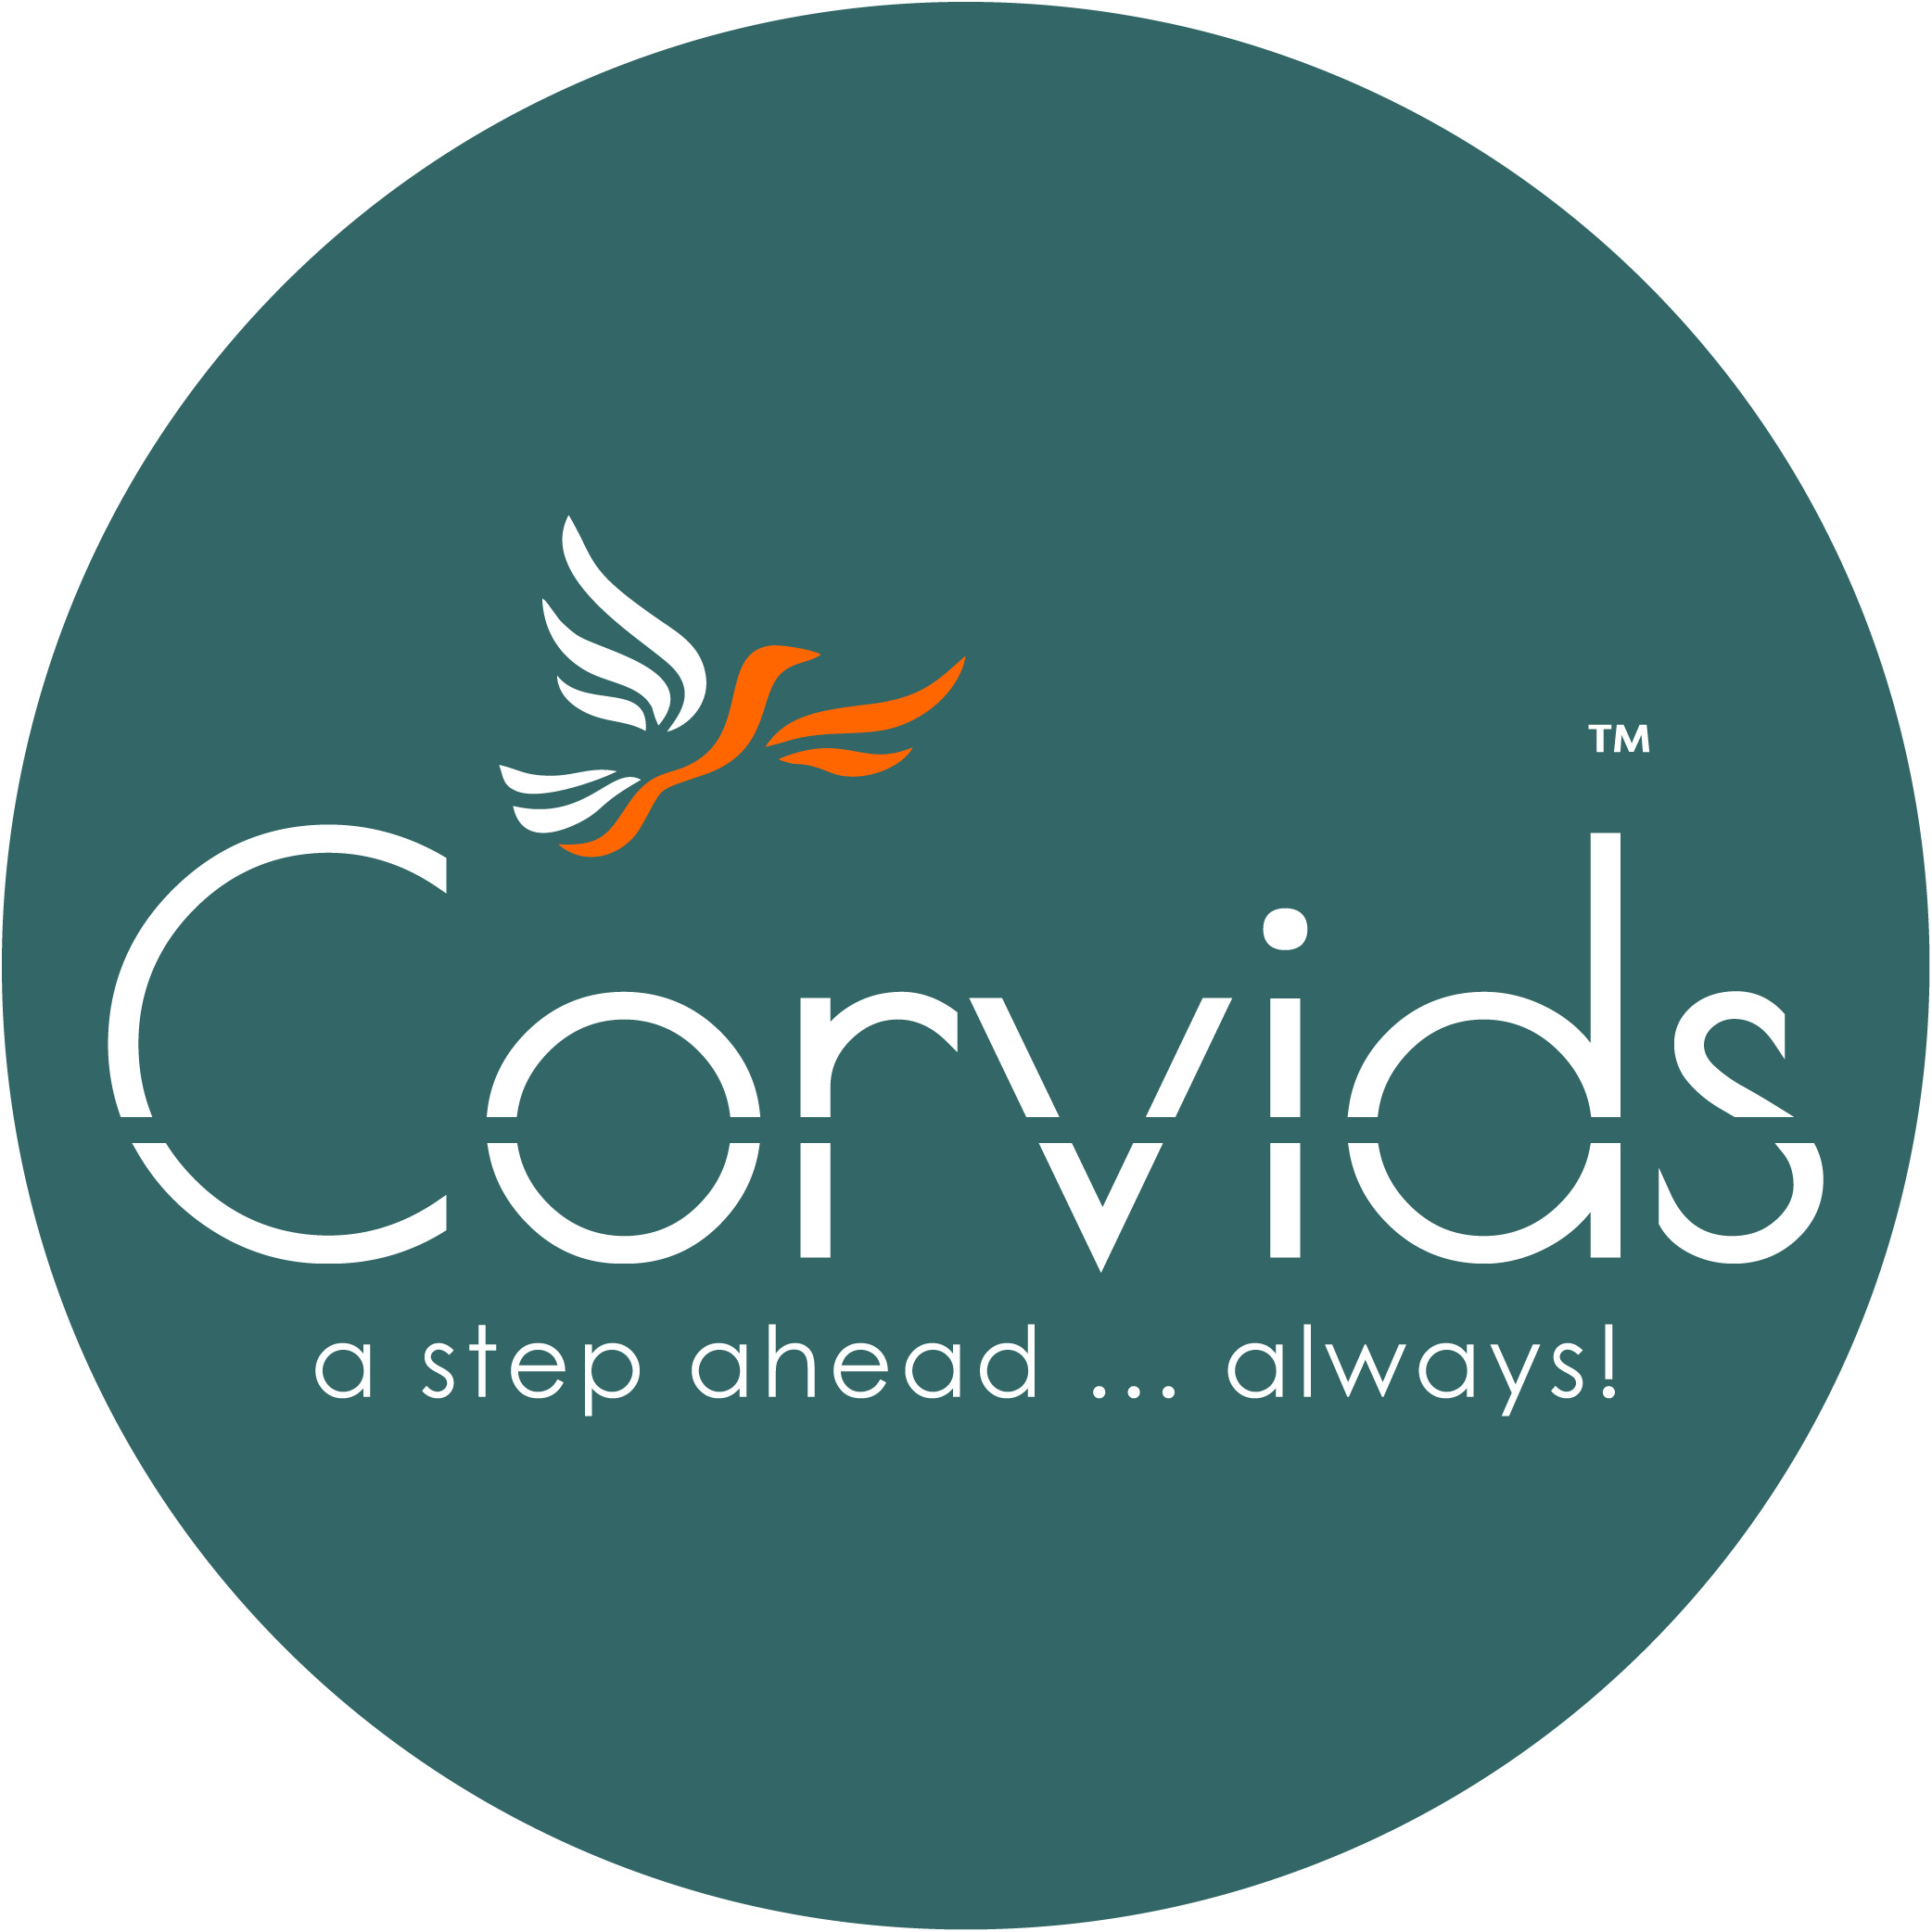 Corvids India